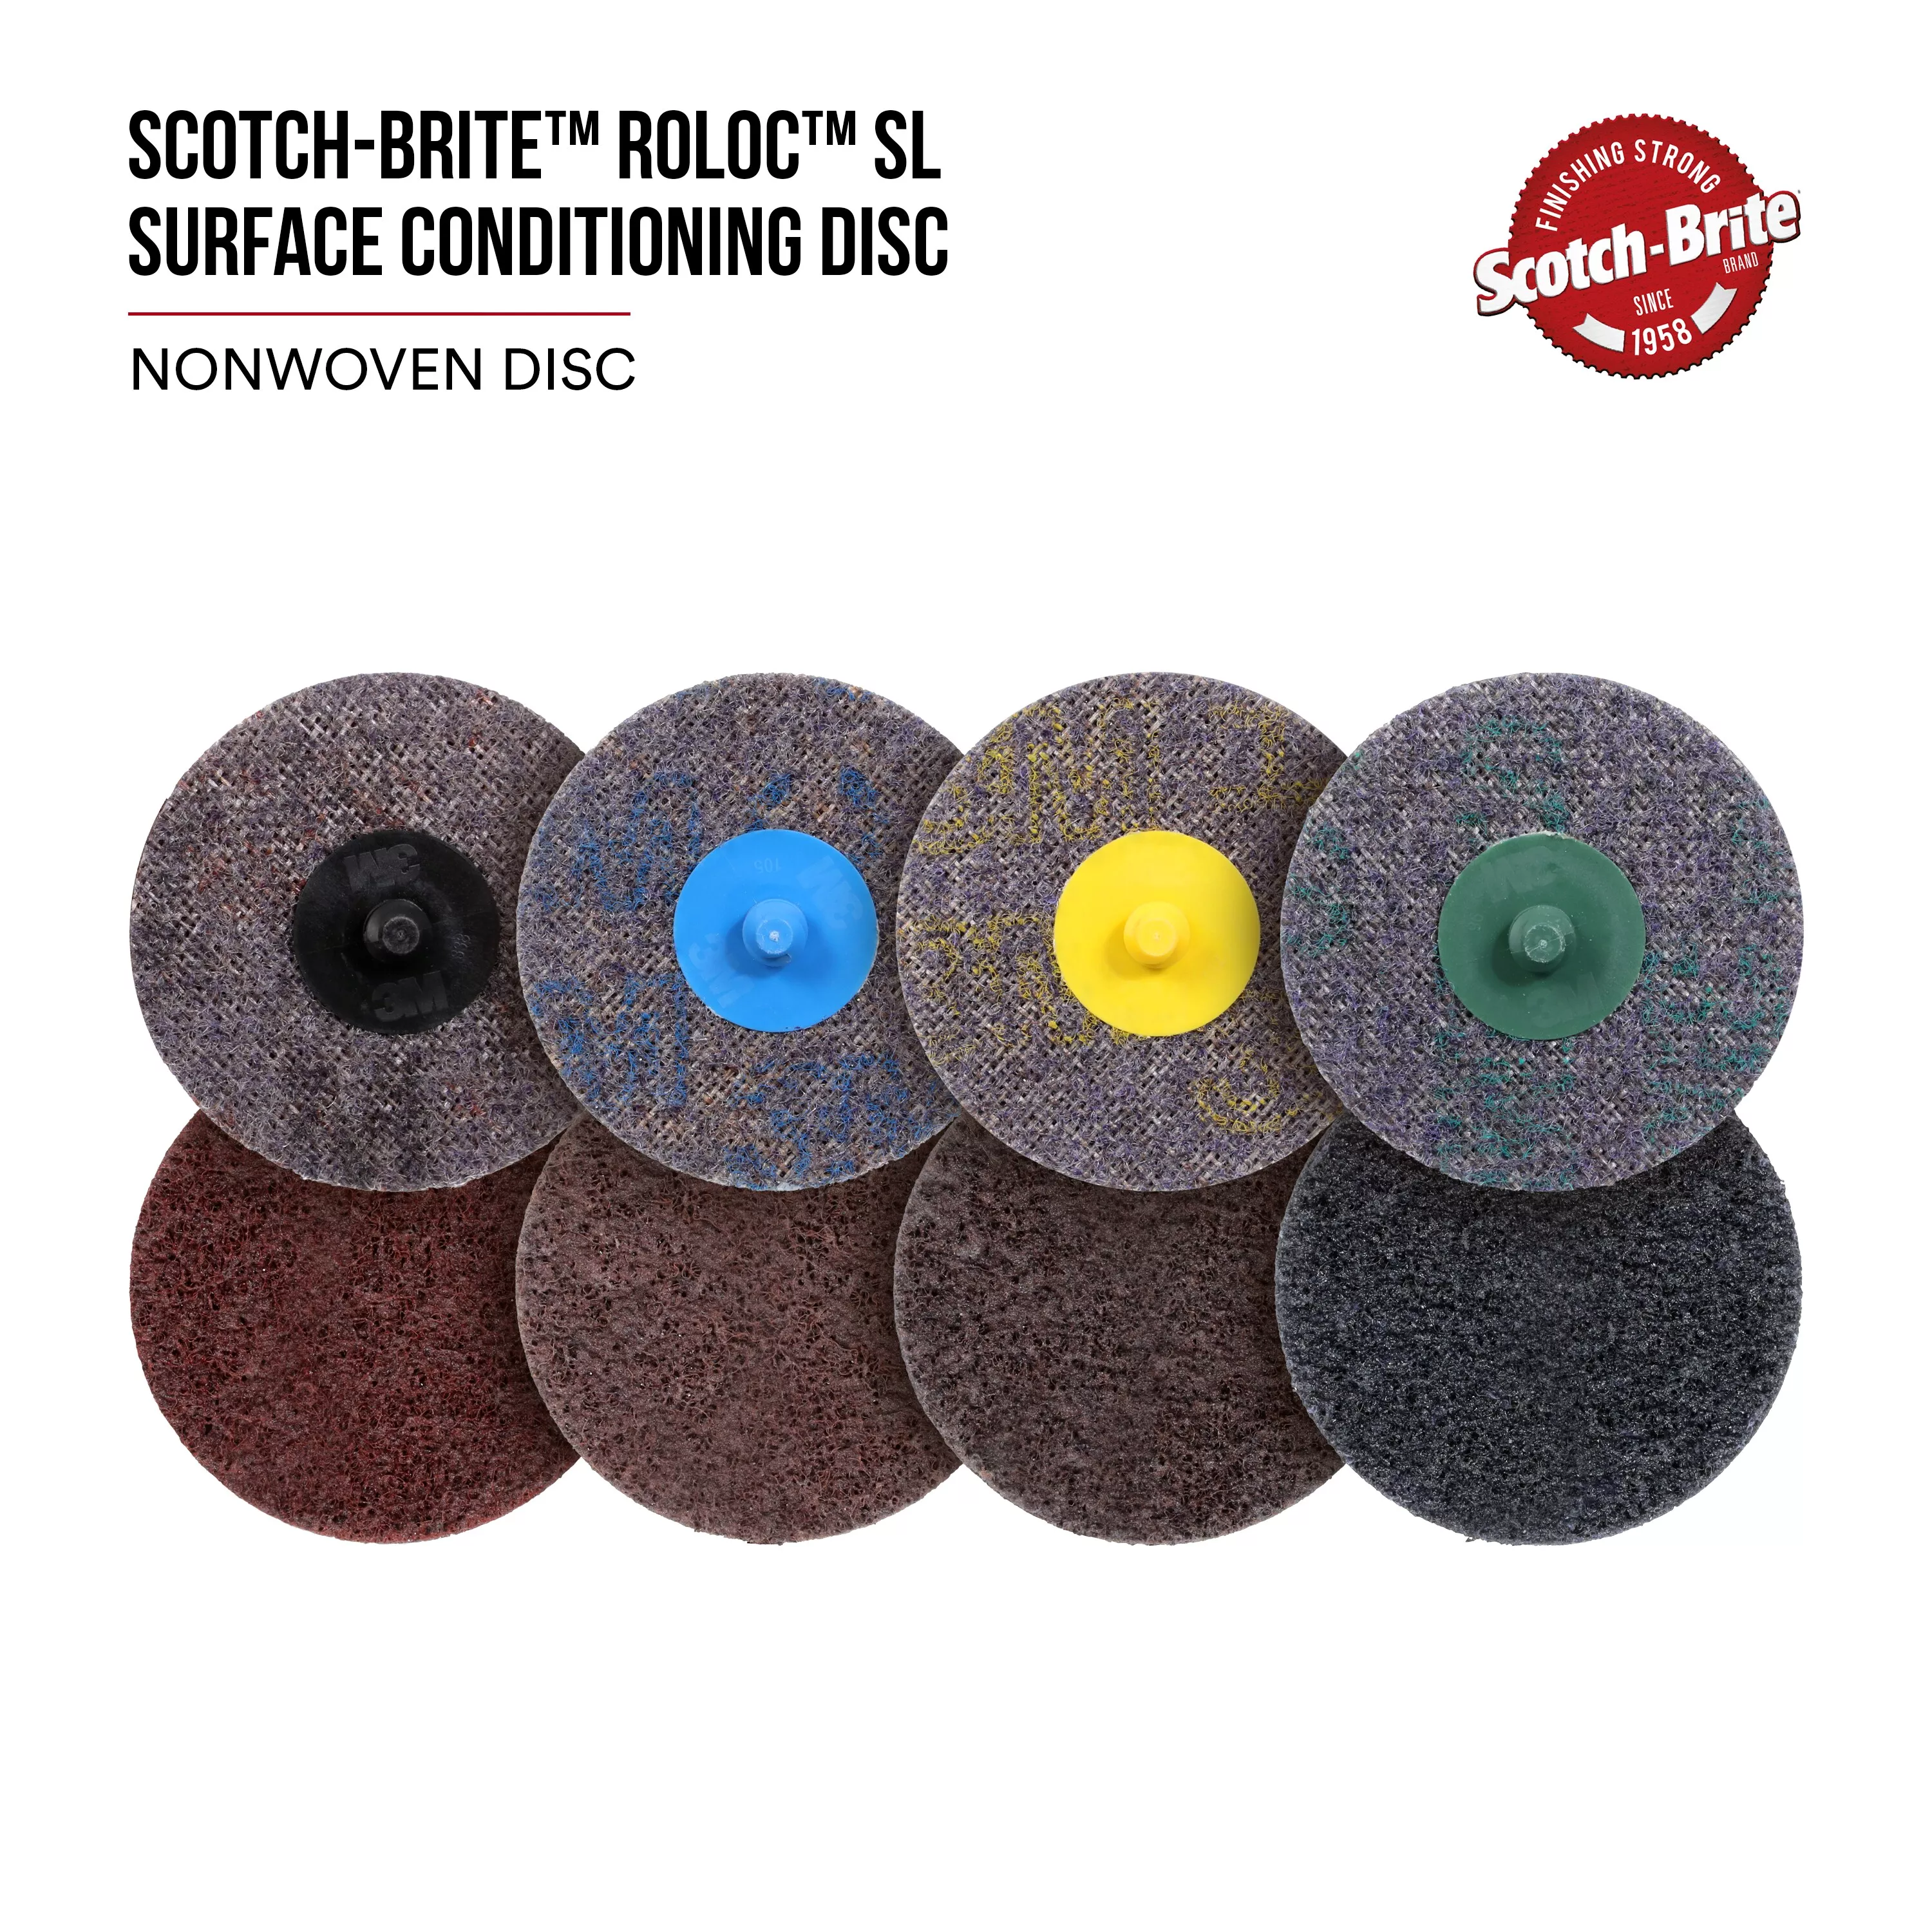 SKU 7000046220 | Scotch-Brite™ Roloc™ SL Surface Conditioning Disc